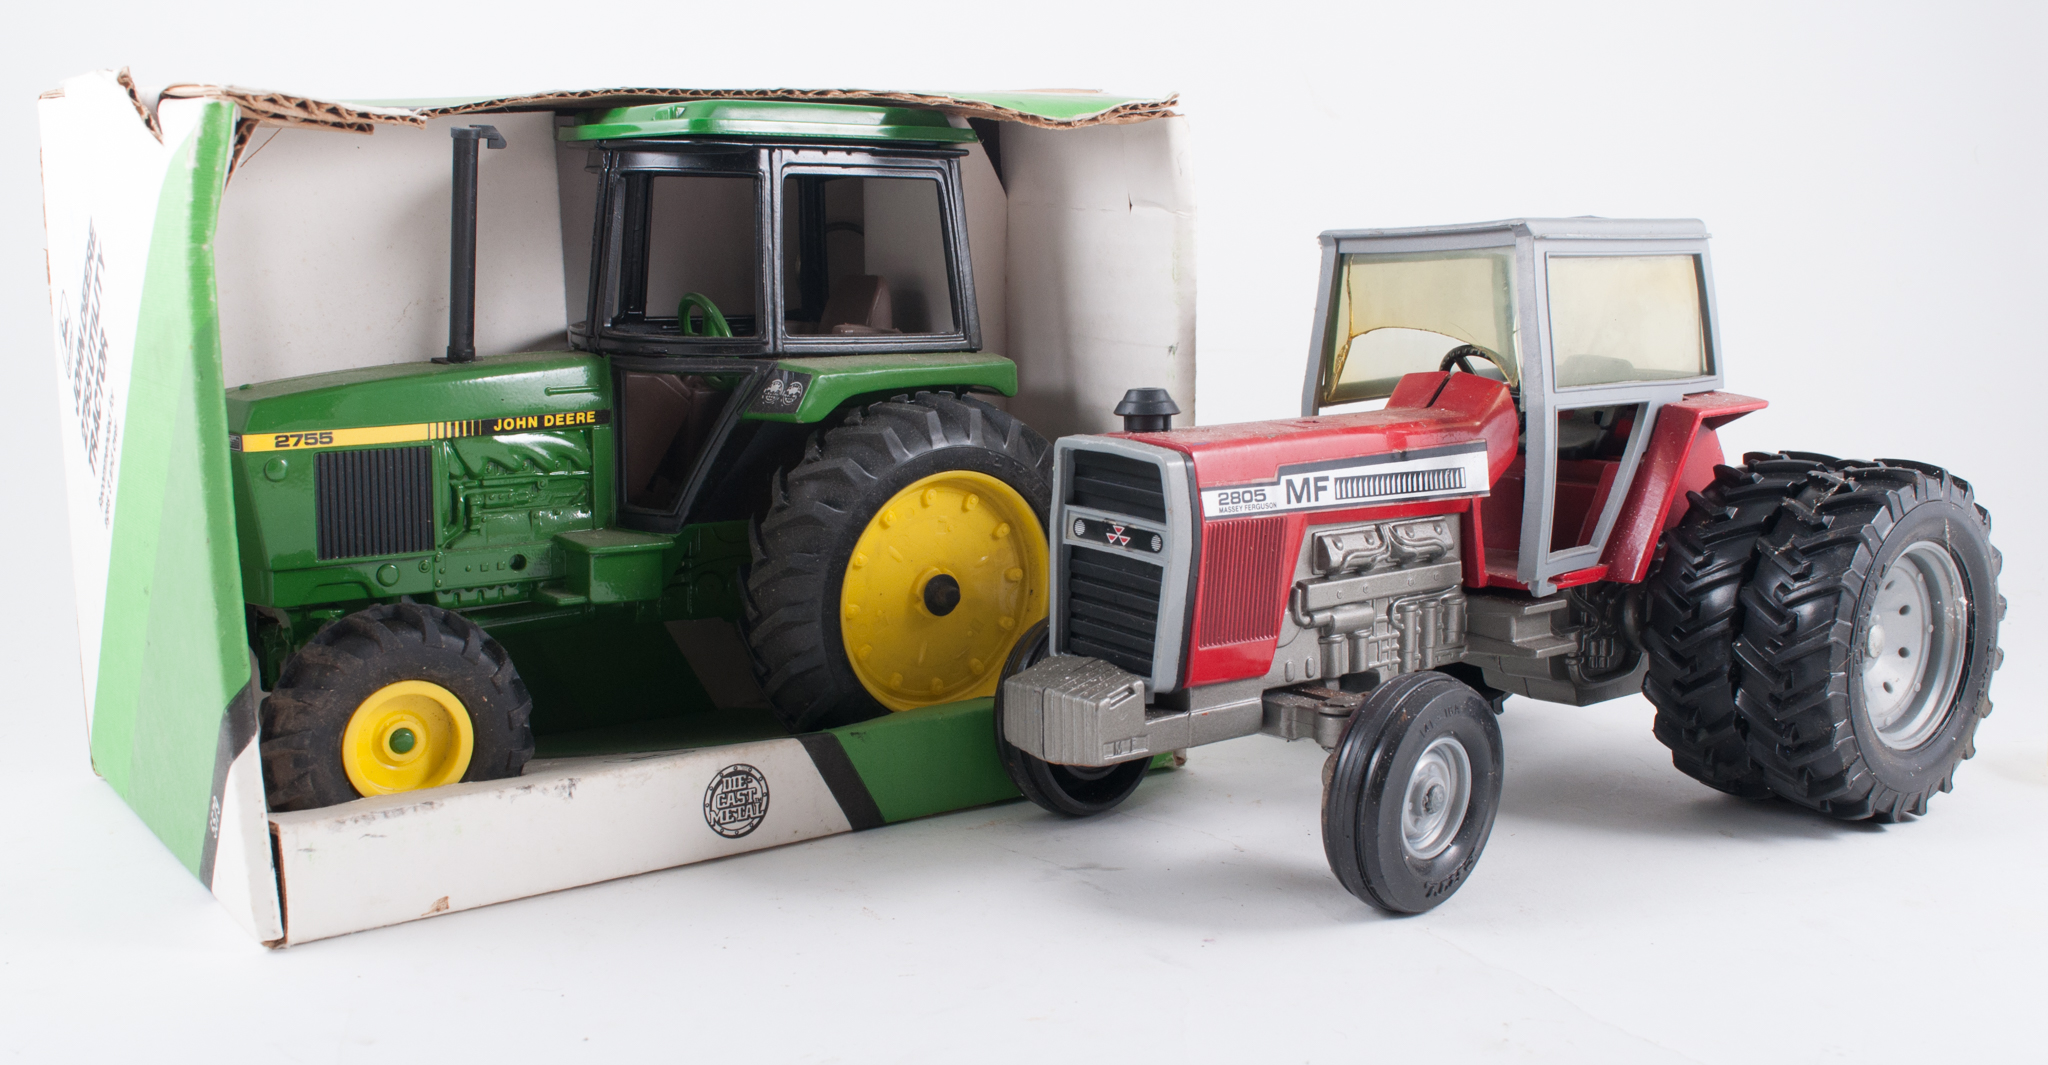 Large scale metal model tractors by Ertl, John Deere 2744 Utility tractor (boxed),